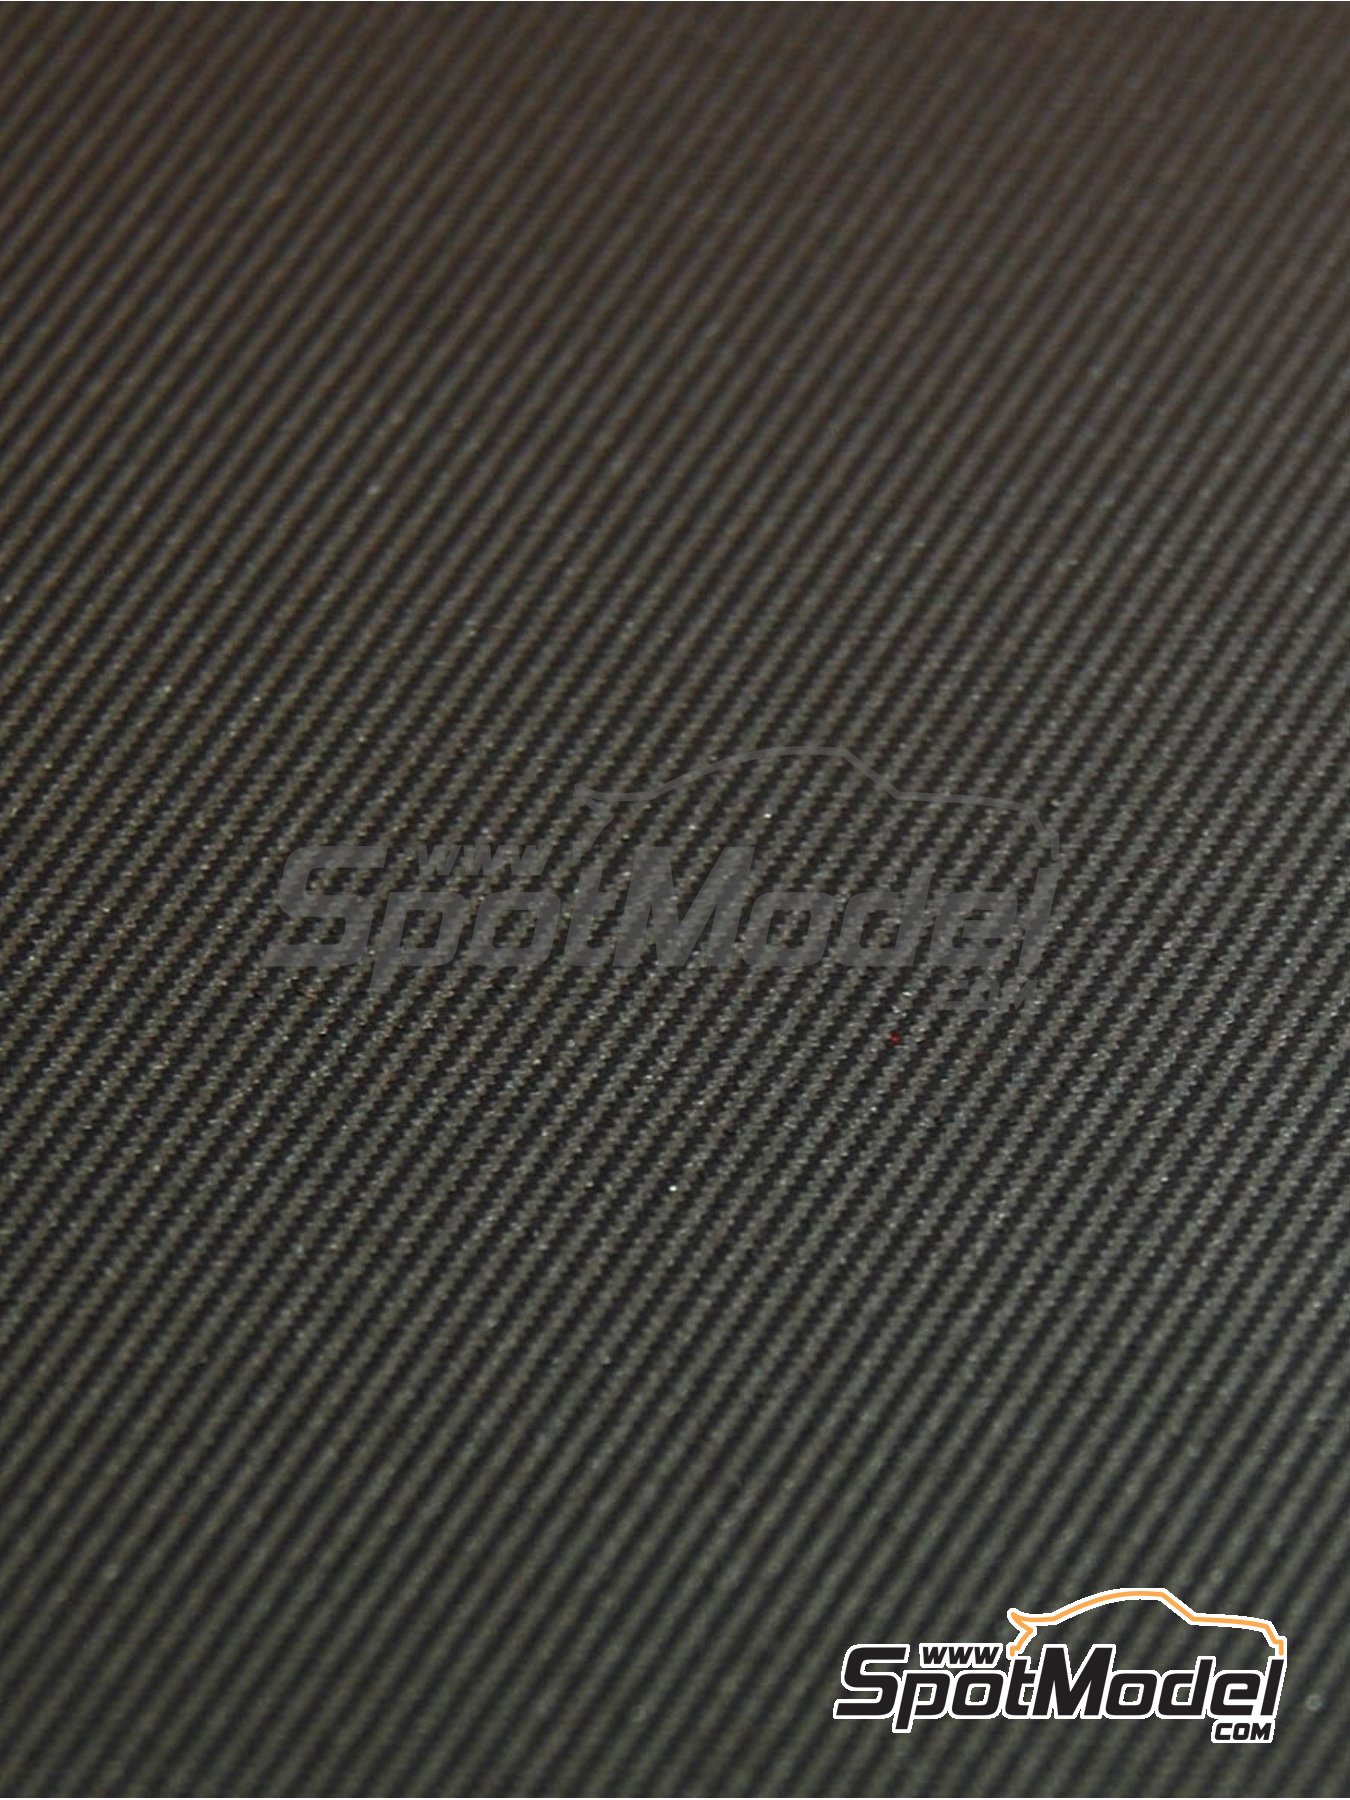 1/24 Carbon Twill Weave Black on Amber Metallic Decal Sheet 